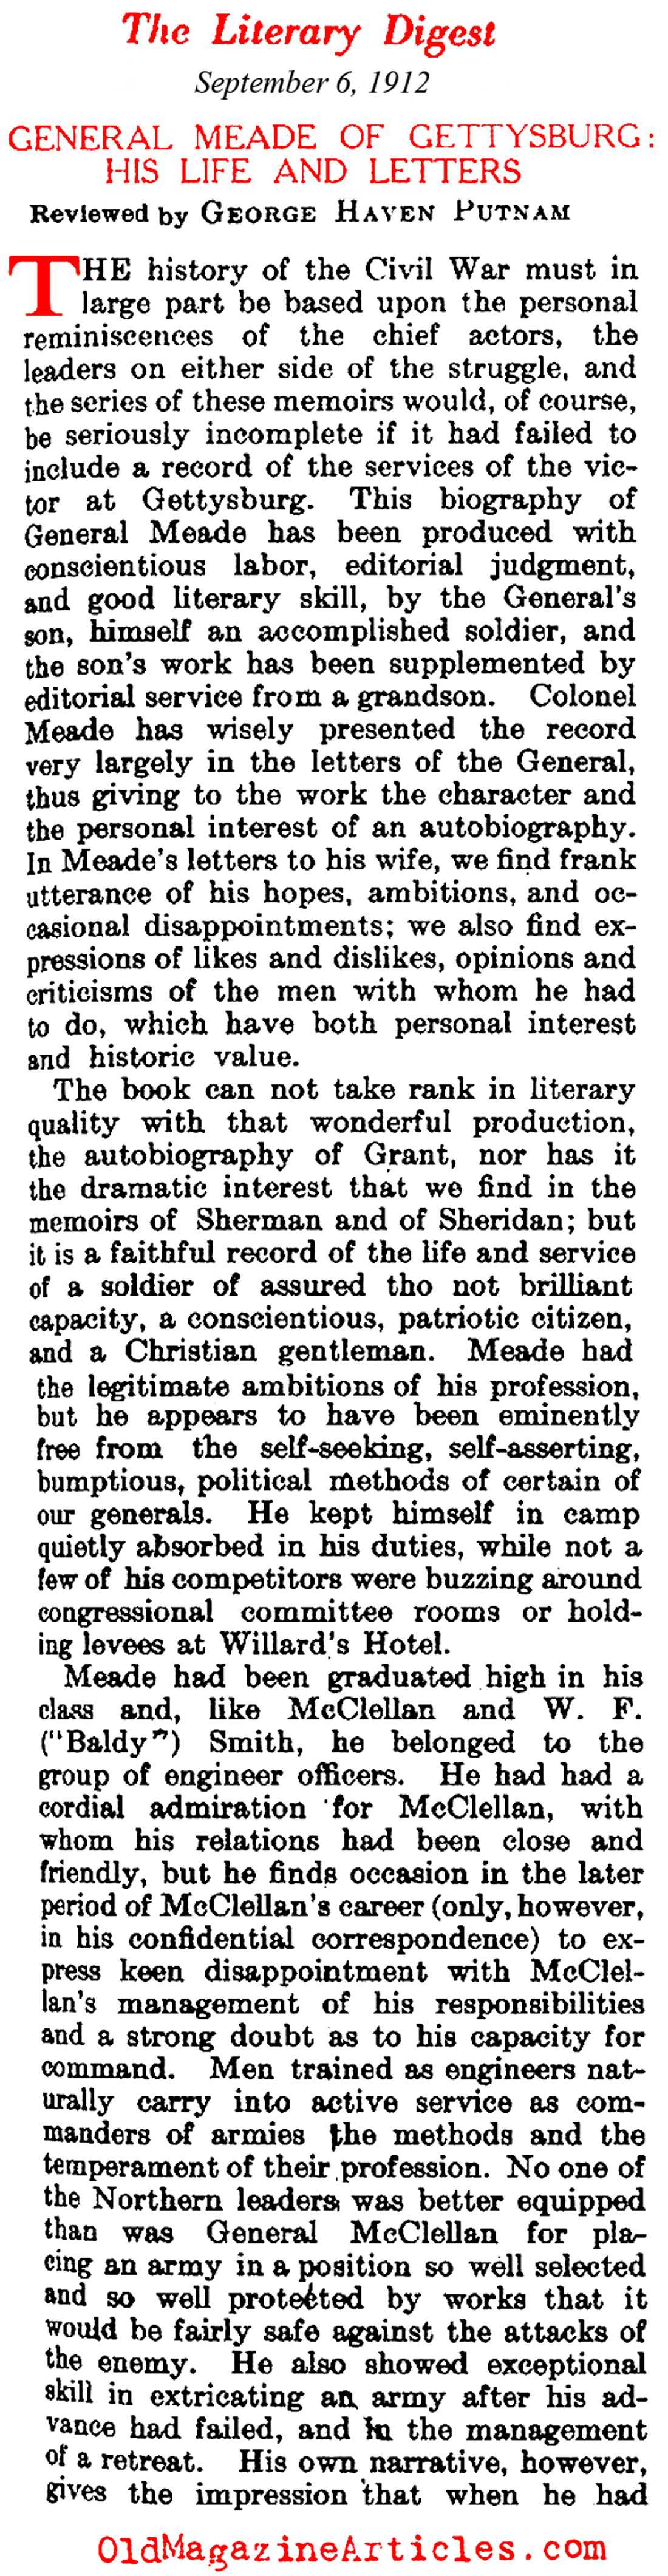 The Career of General George Gordon Meade (Literary Digest, 1912)